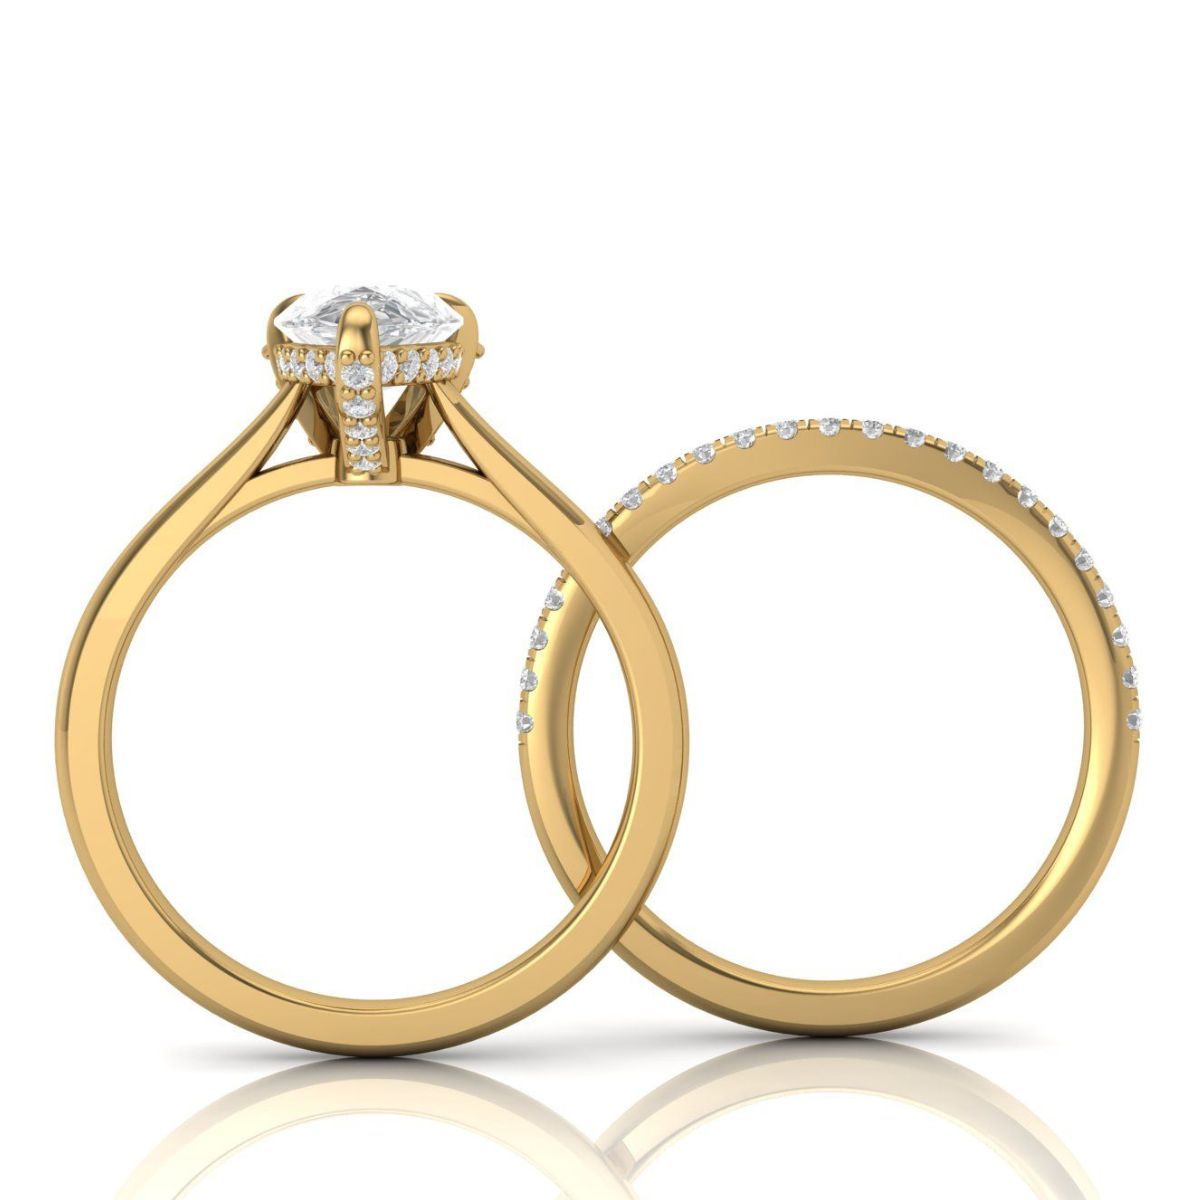 Hidden halo engagement ring designs | CustomMade.com